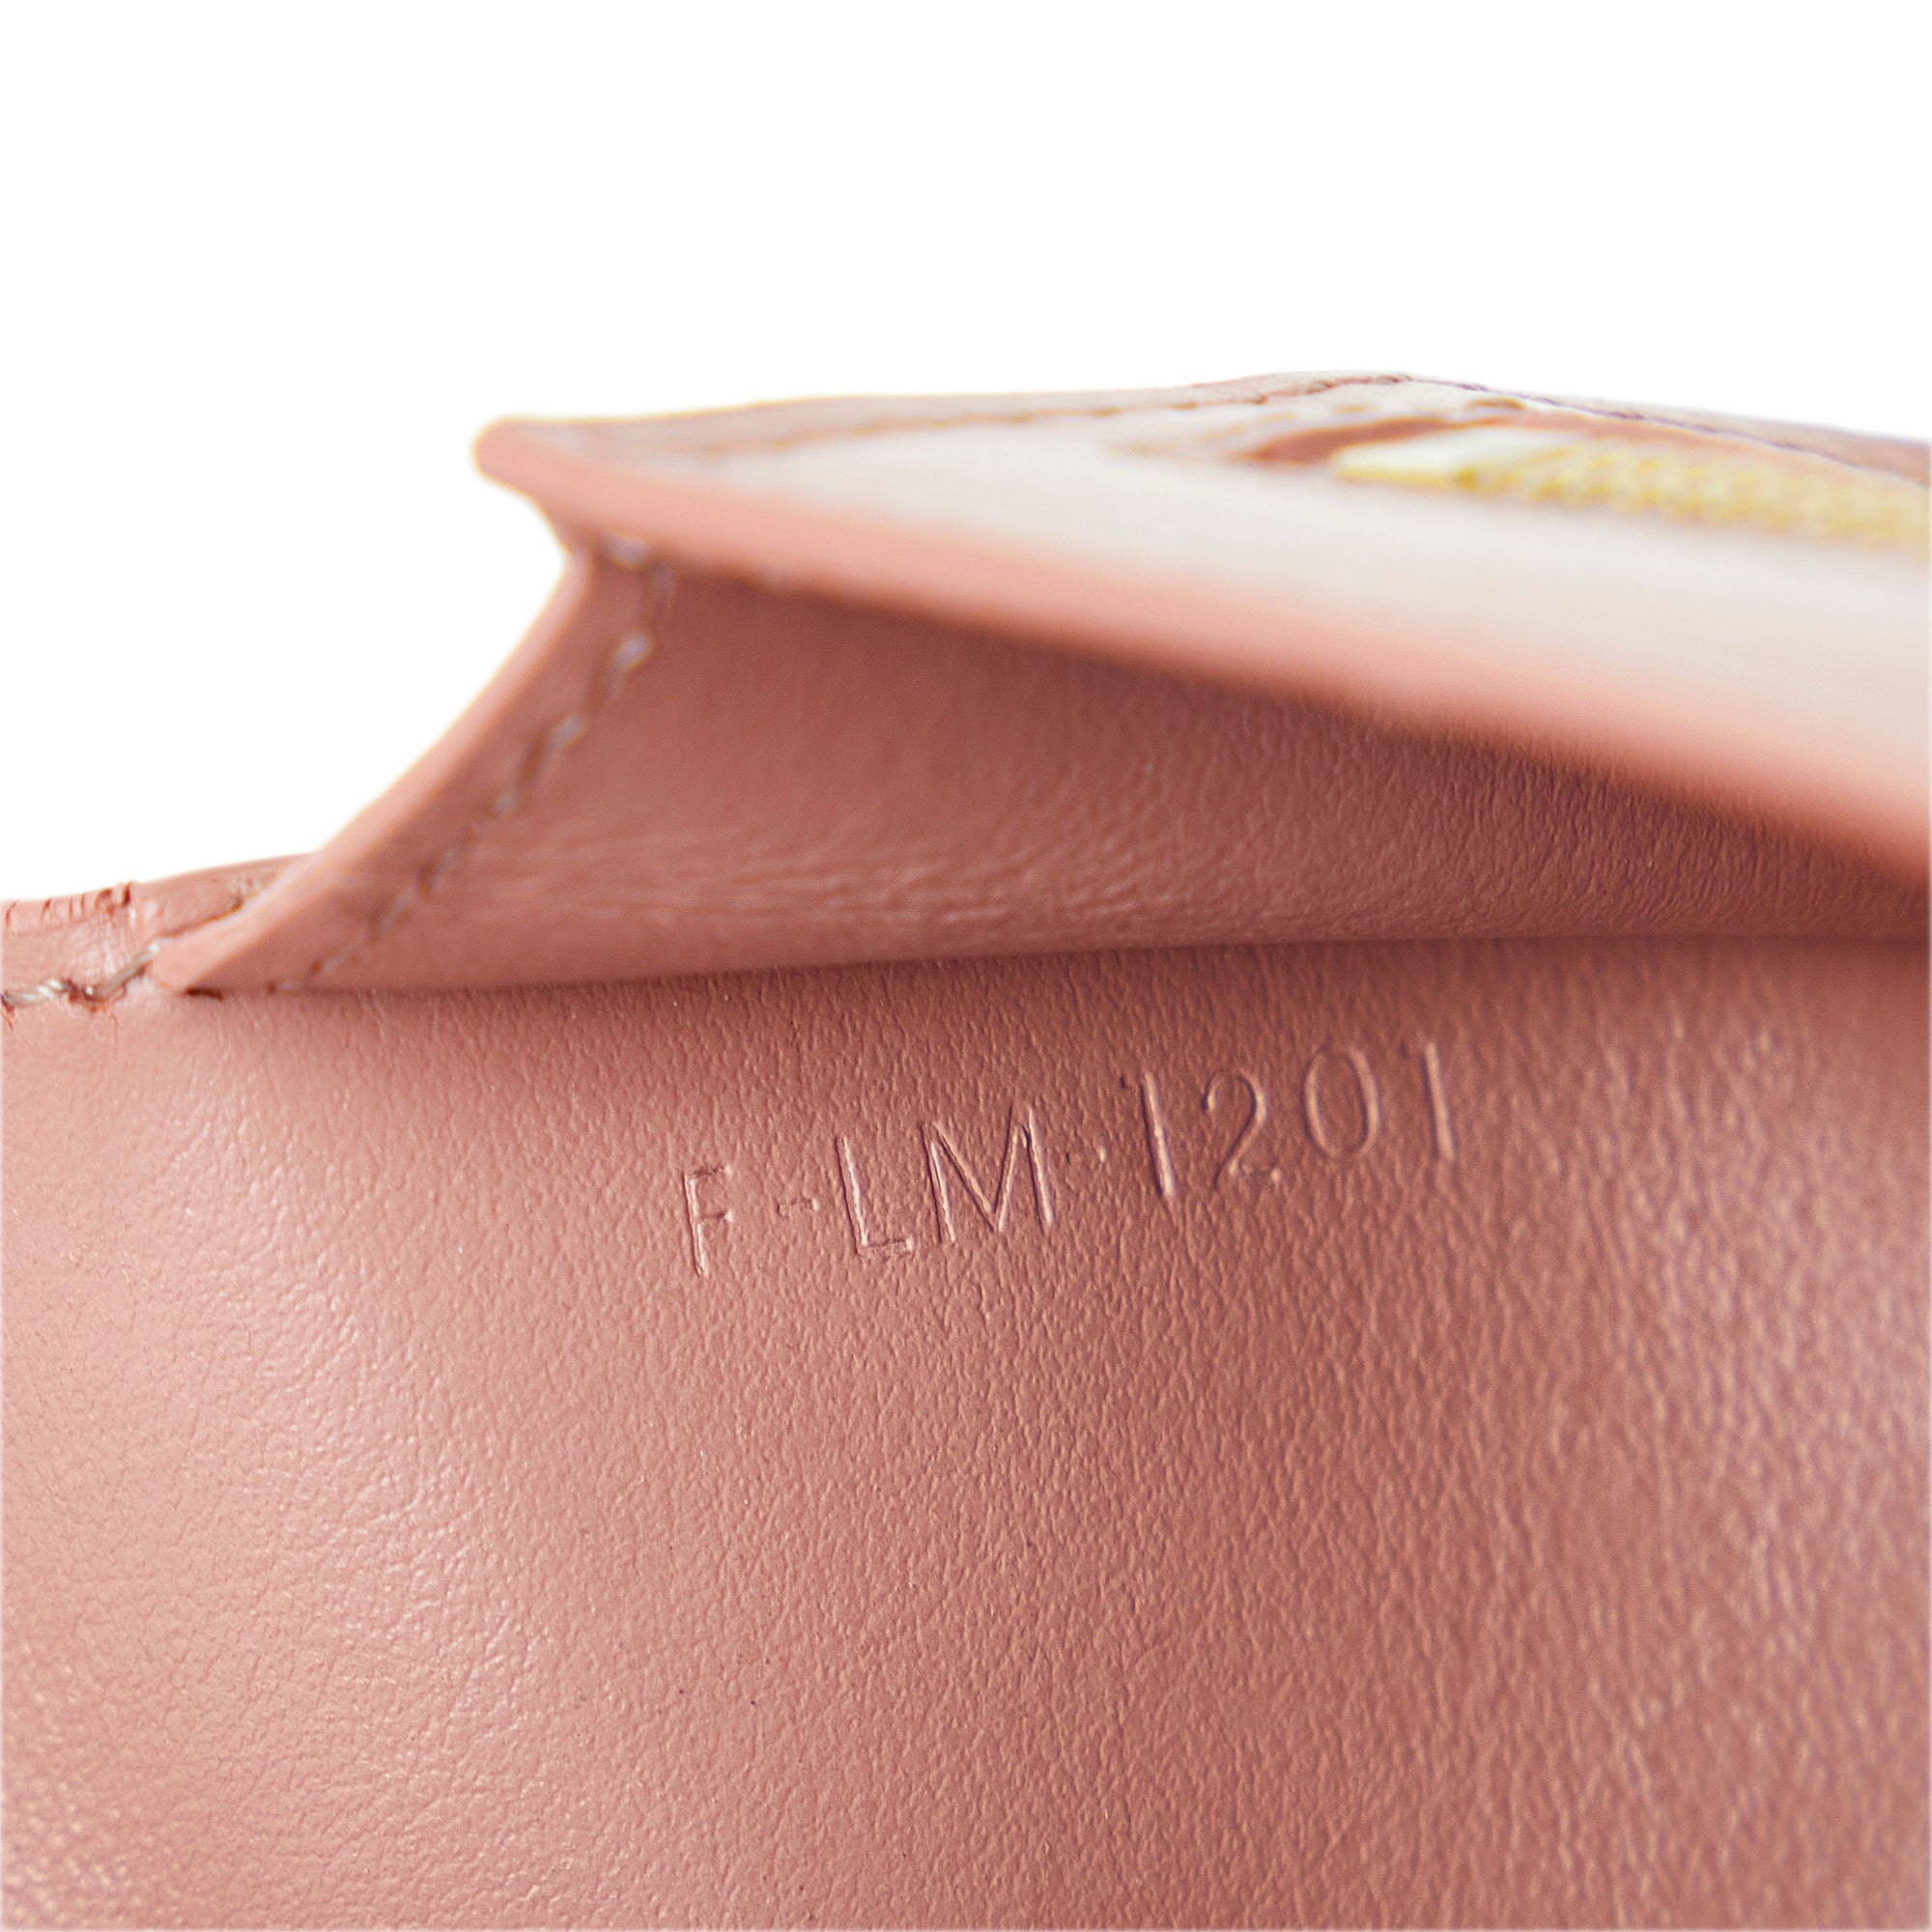 Celine Multifunction Strap Leather Wallet Small Wallets